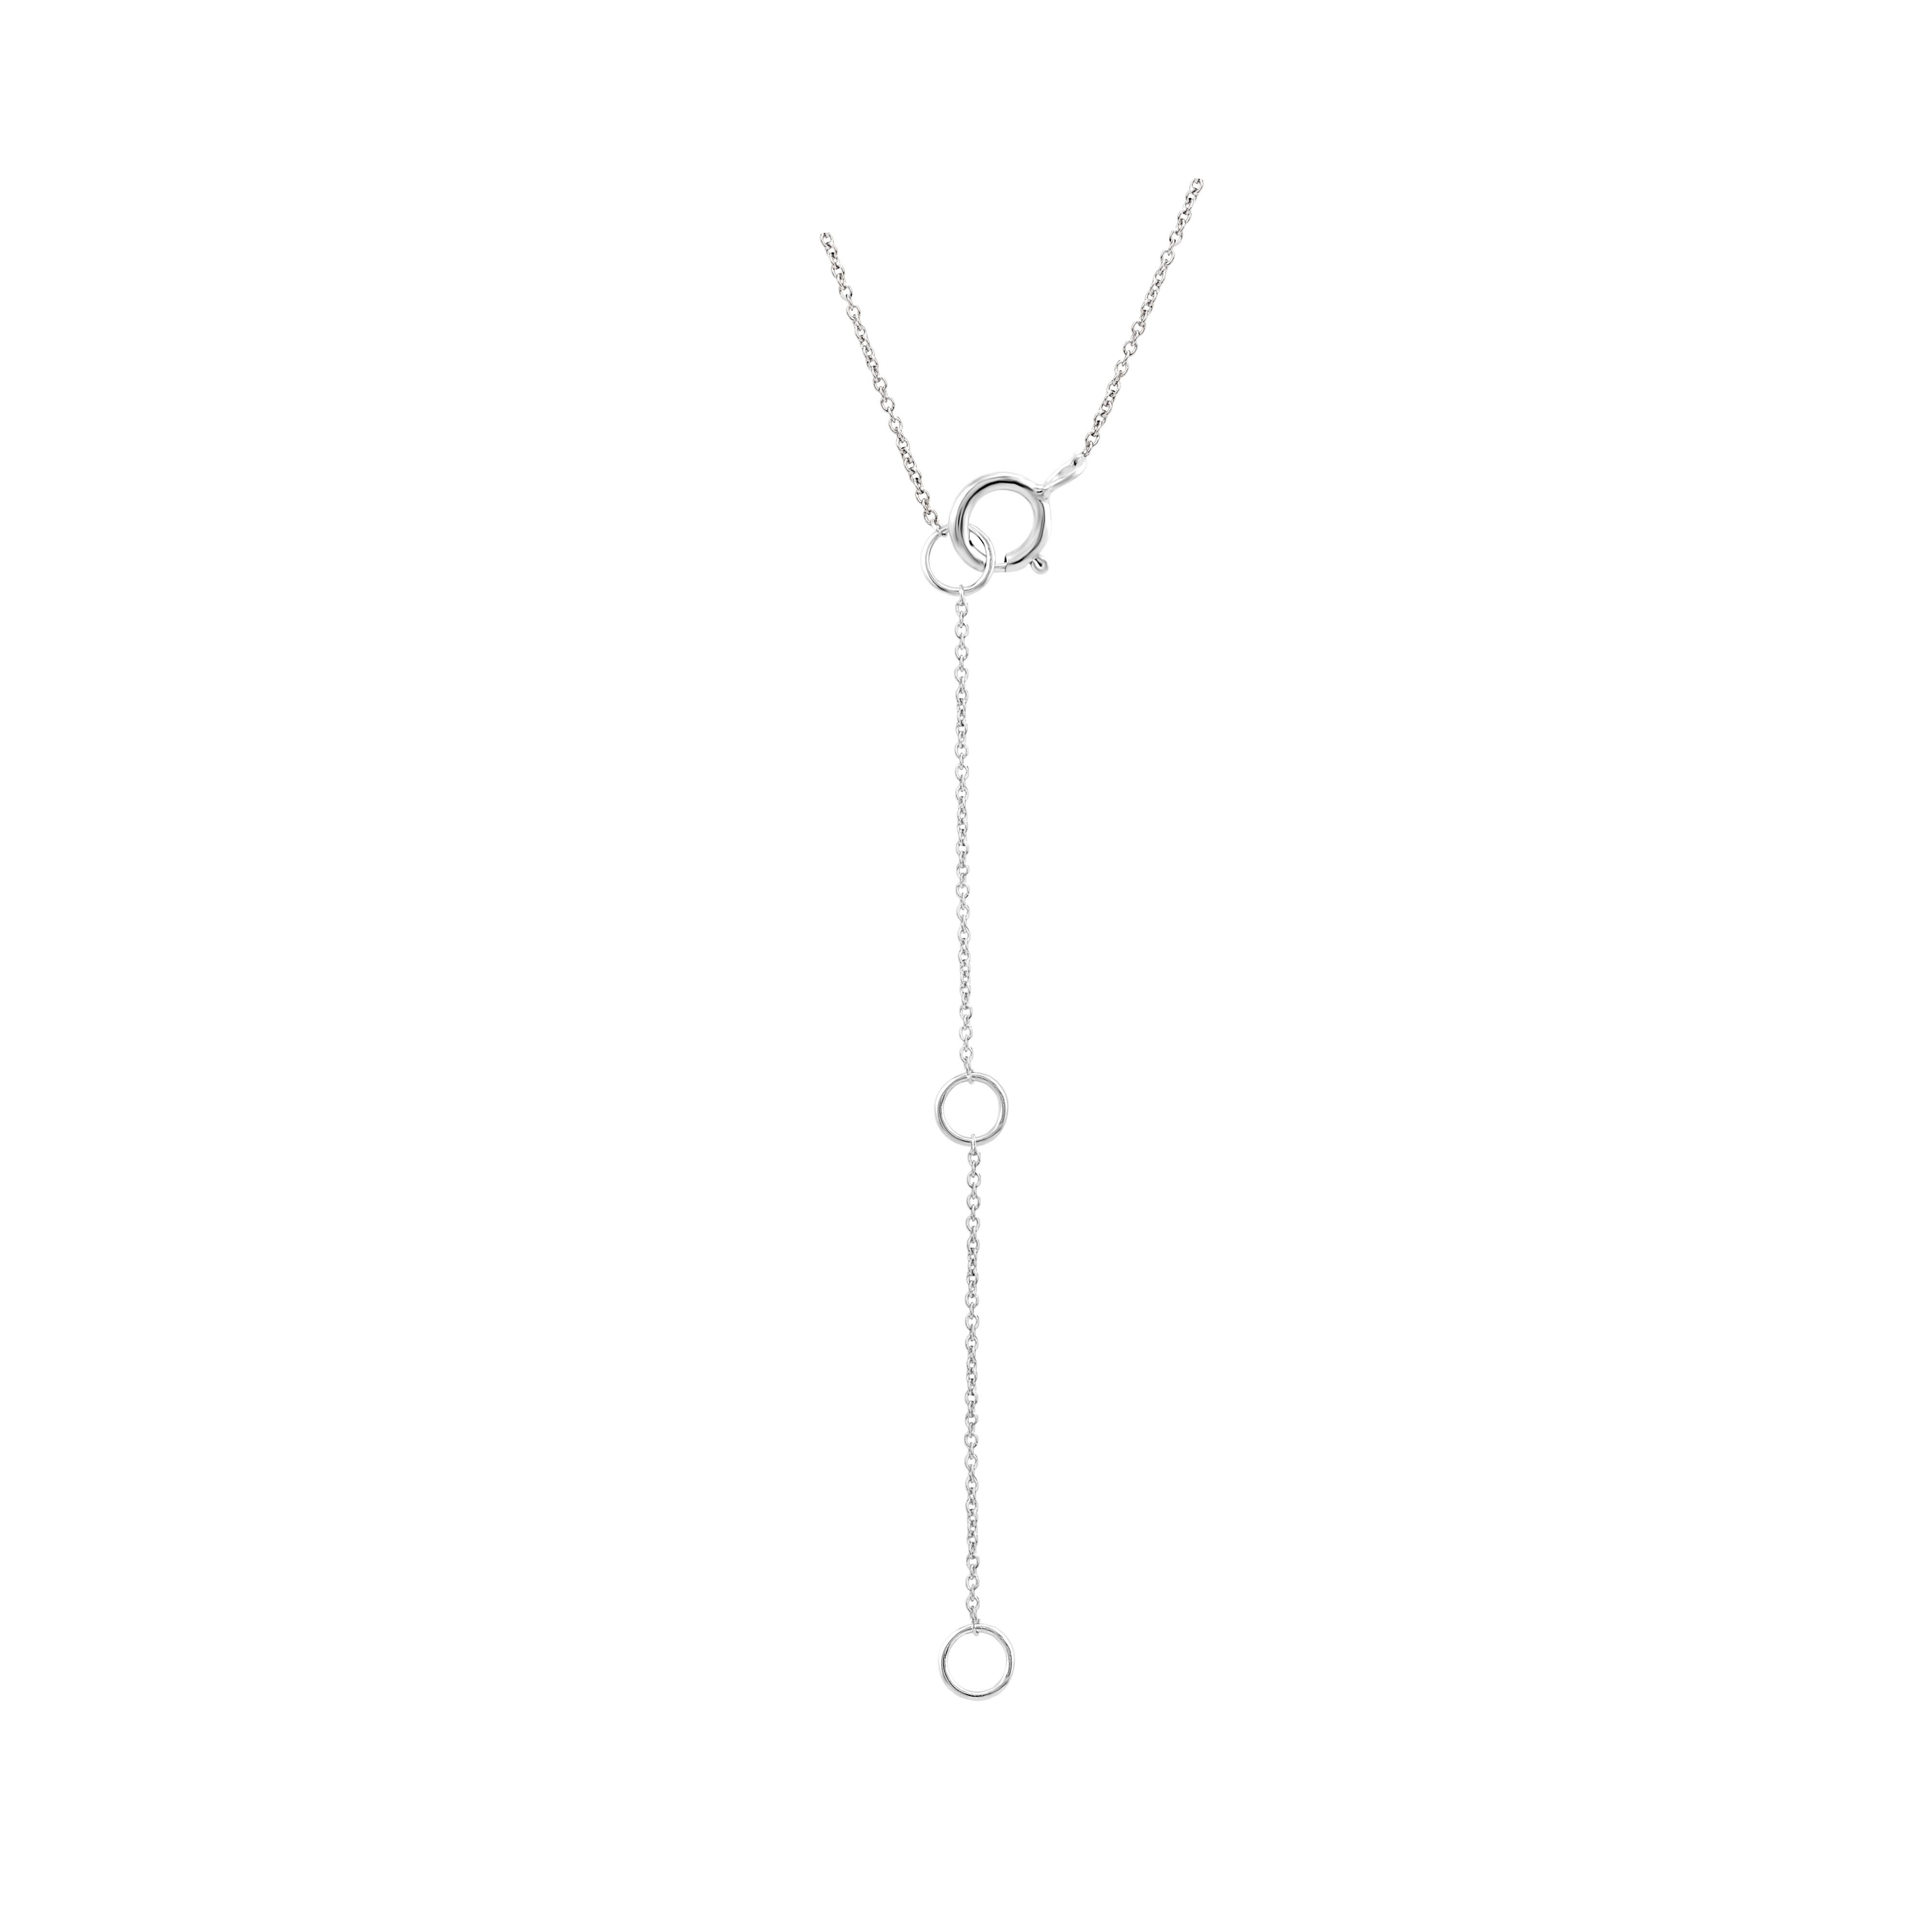 Round Cut Luxle Diamond x Pendant Necklace in 18k White Gold